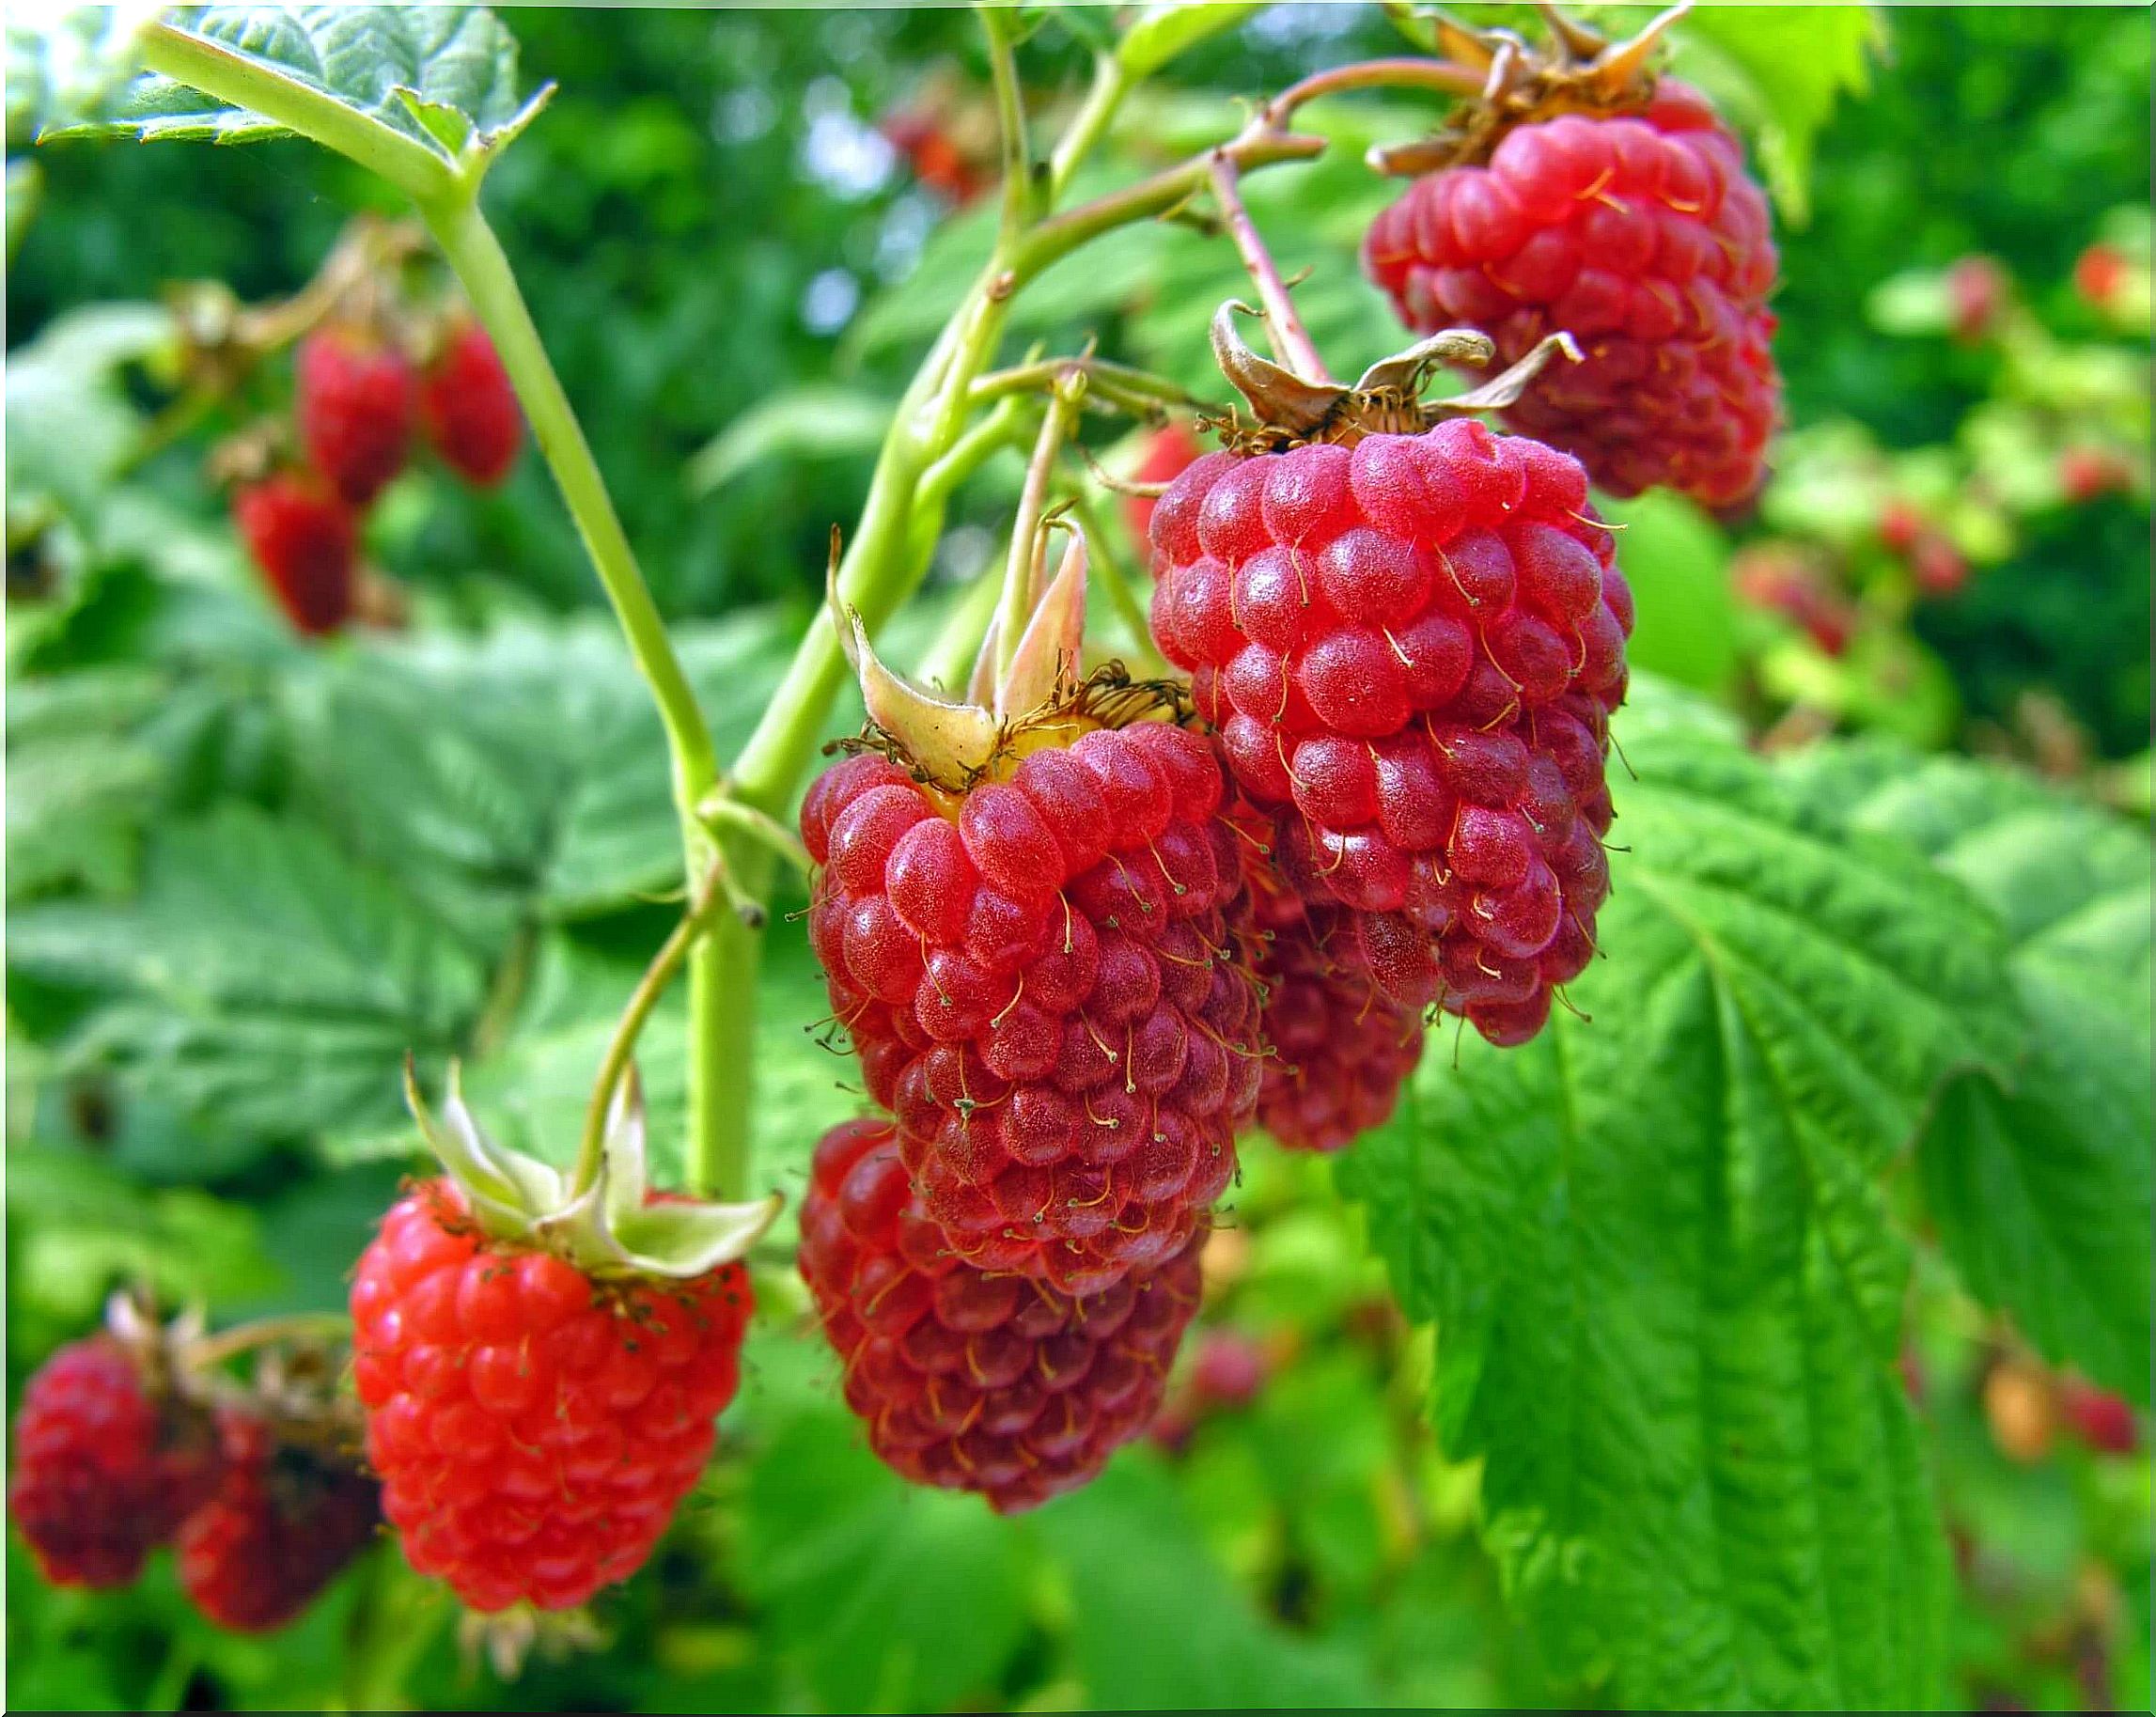 Raspberries are abundant in Europe.